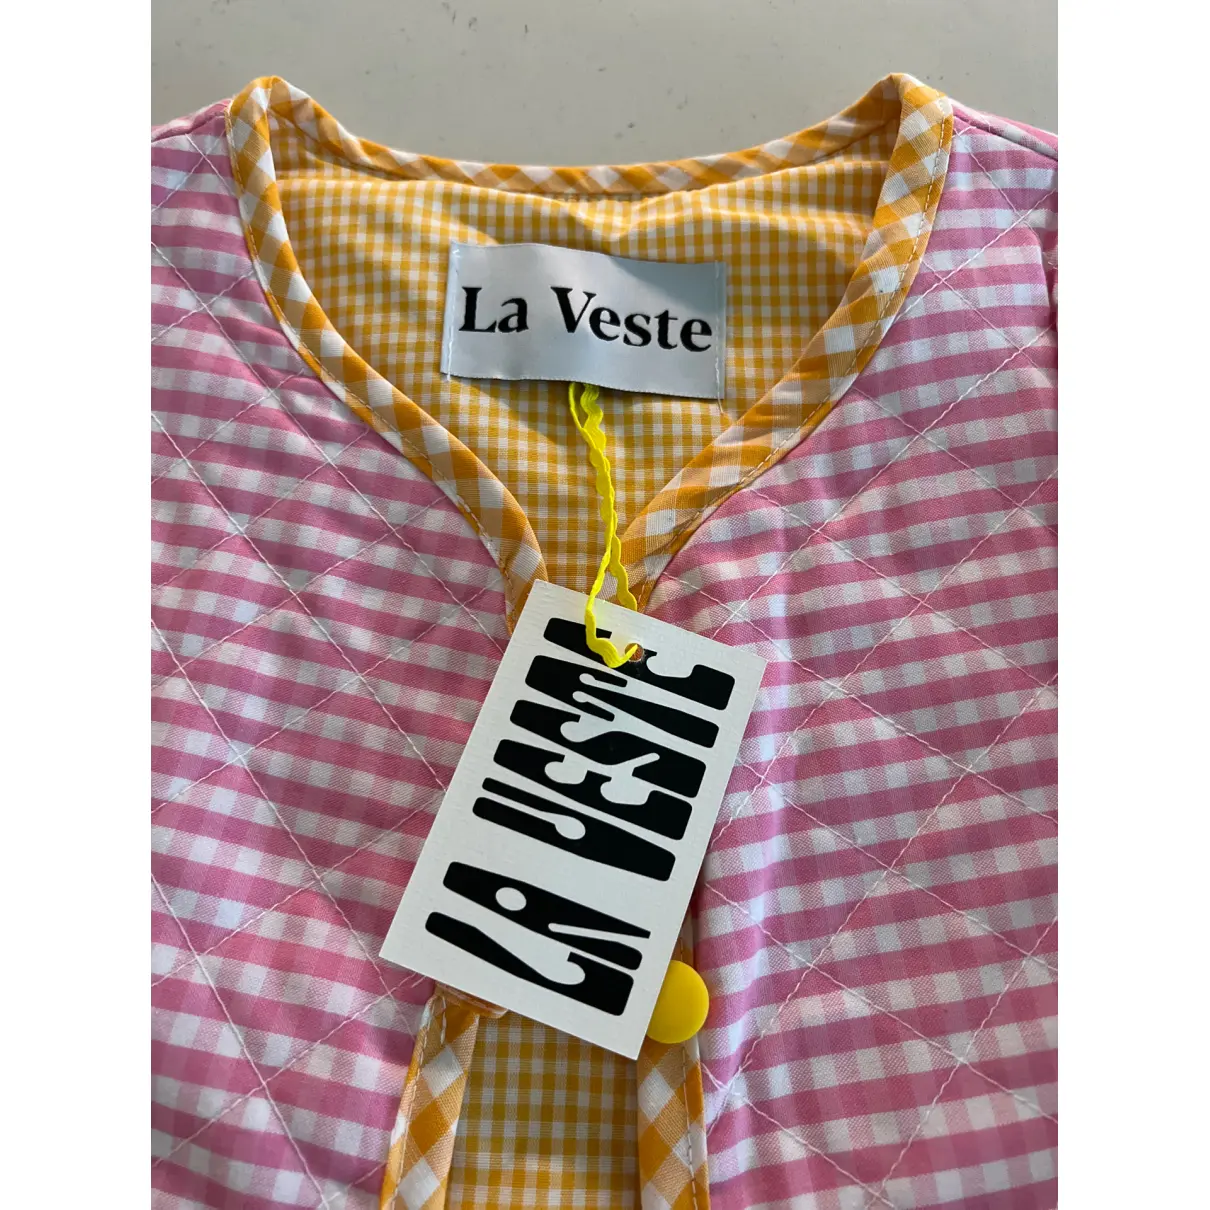 Buy La Veste Jacket online